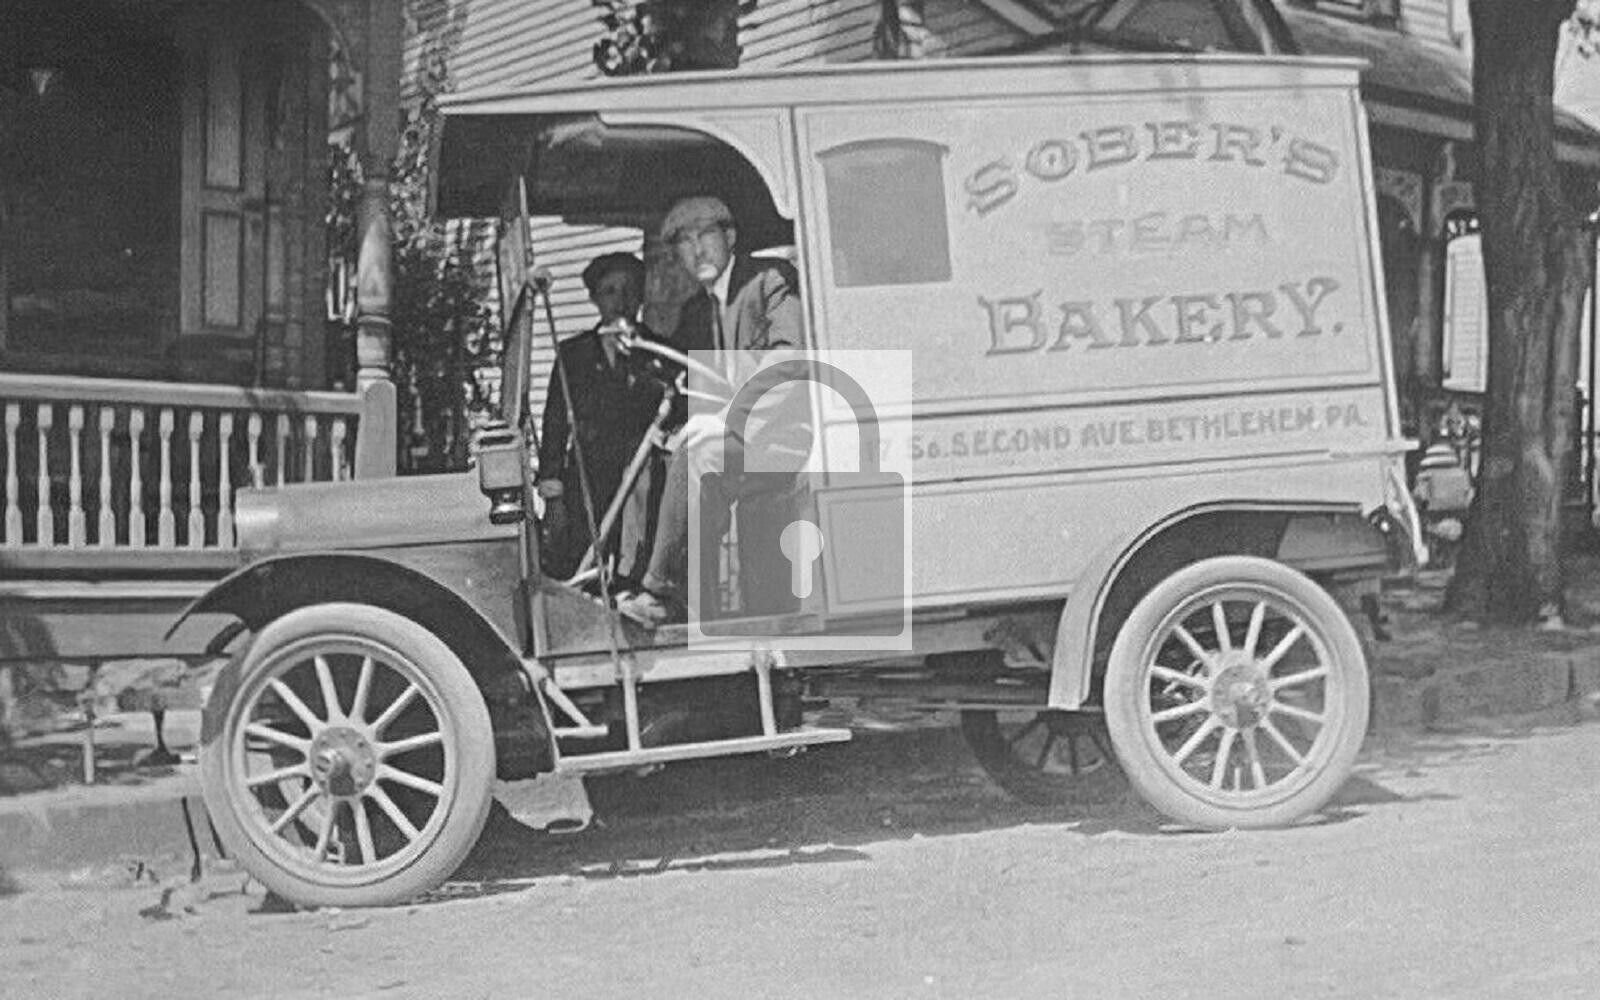 Sobers Steam Bakery Delivery Truck Bethlehem Pennsylvania PA Reprint Postcard